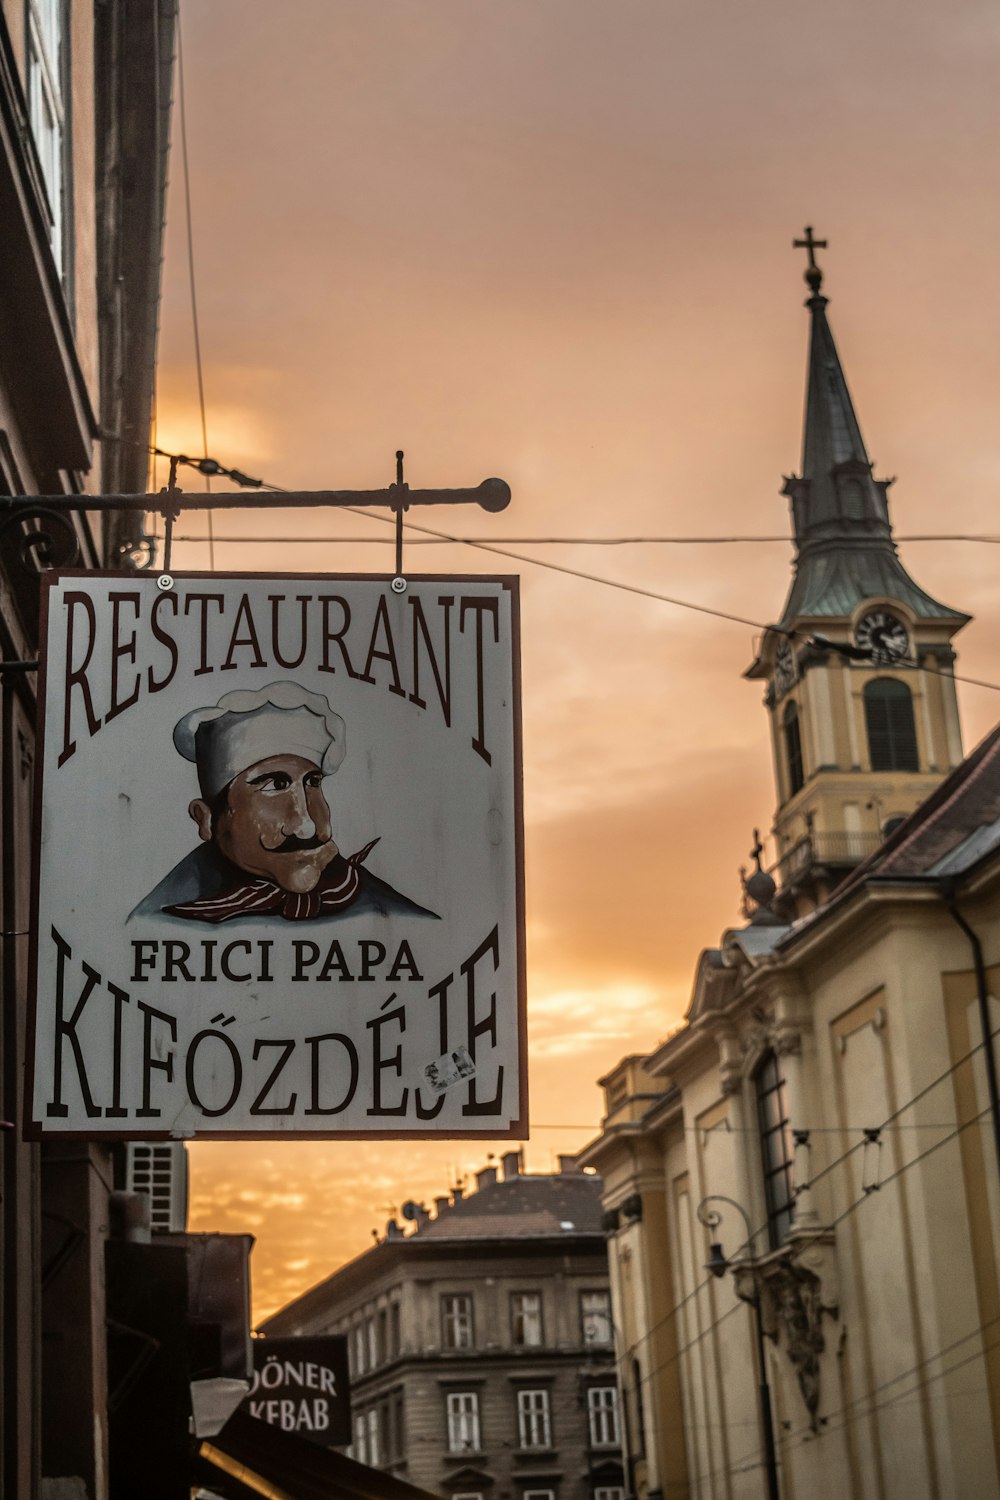 restaurant Kifozdeje signage